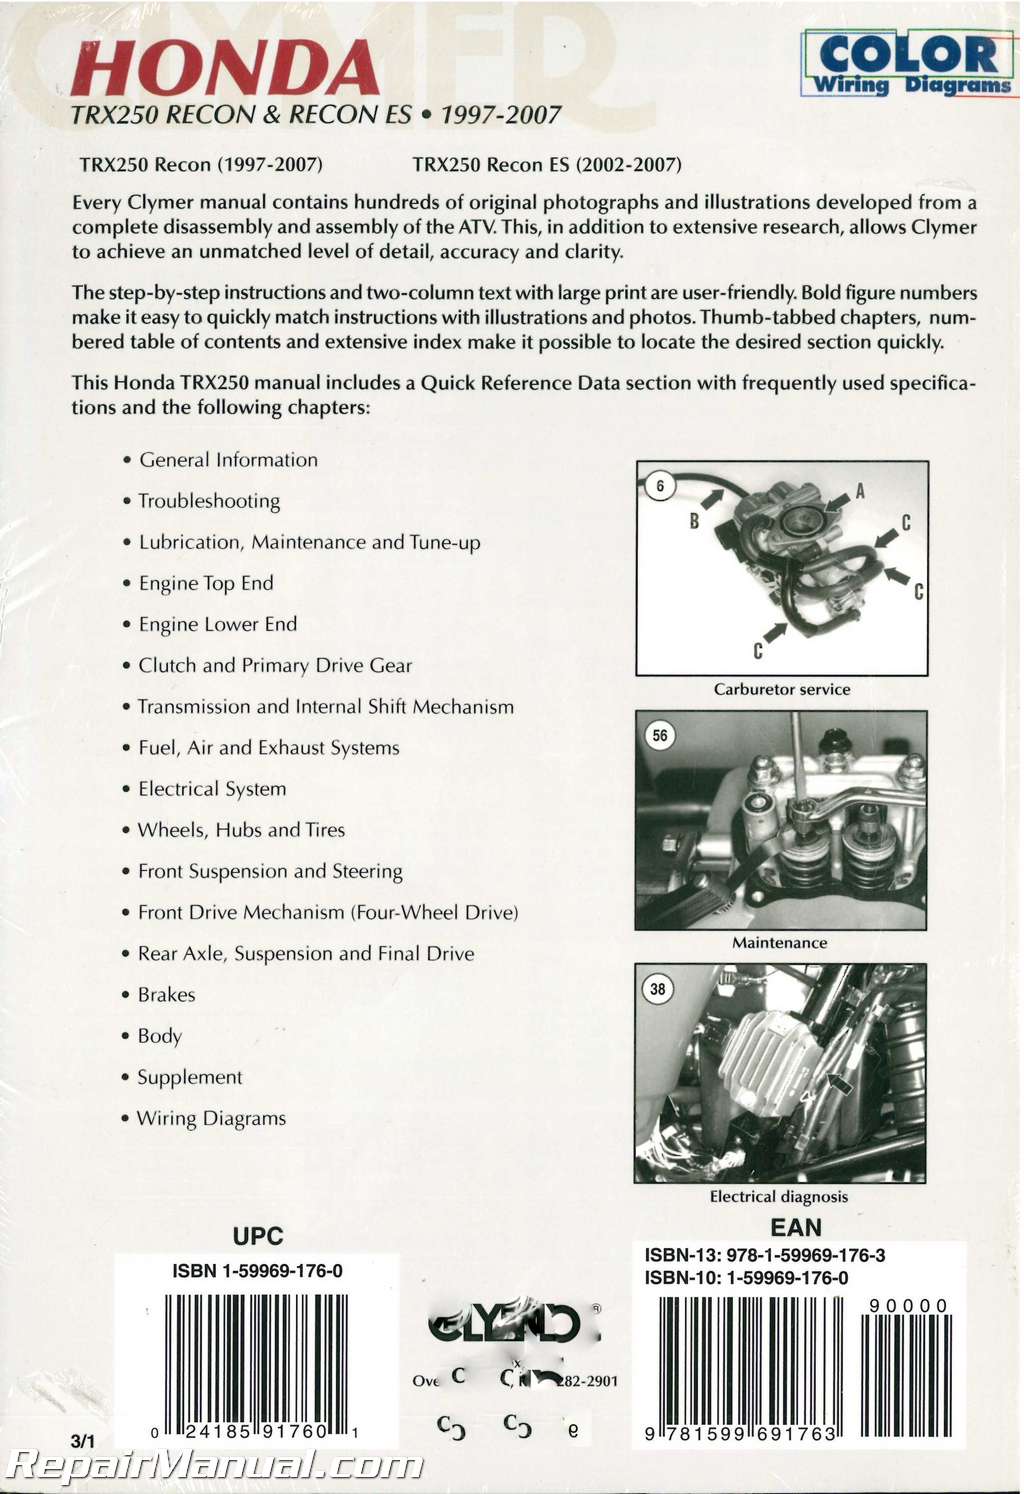 Honda Recon Service Manual Free Online Download